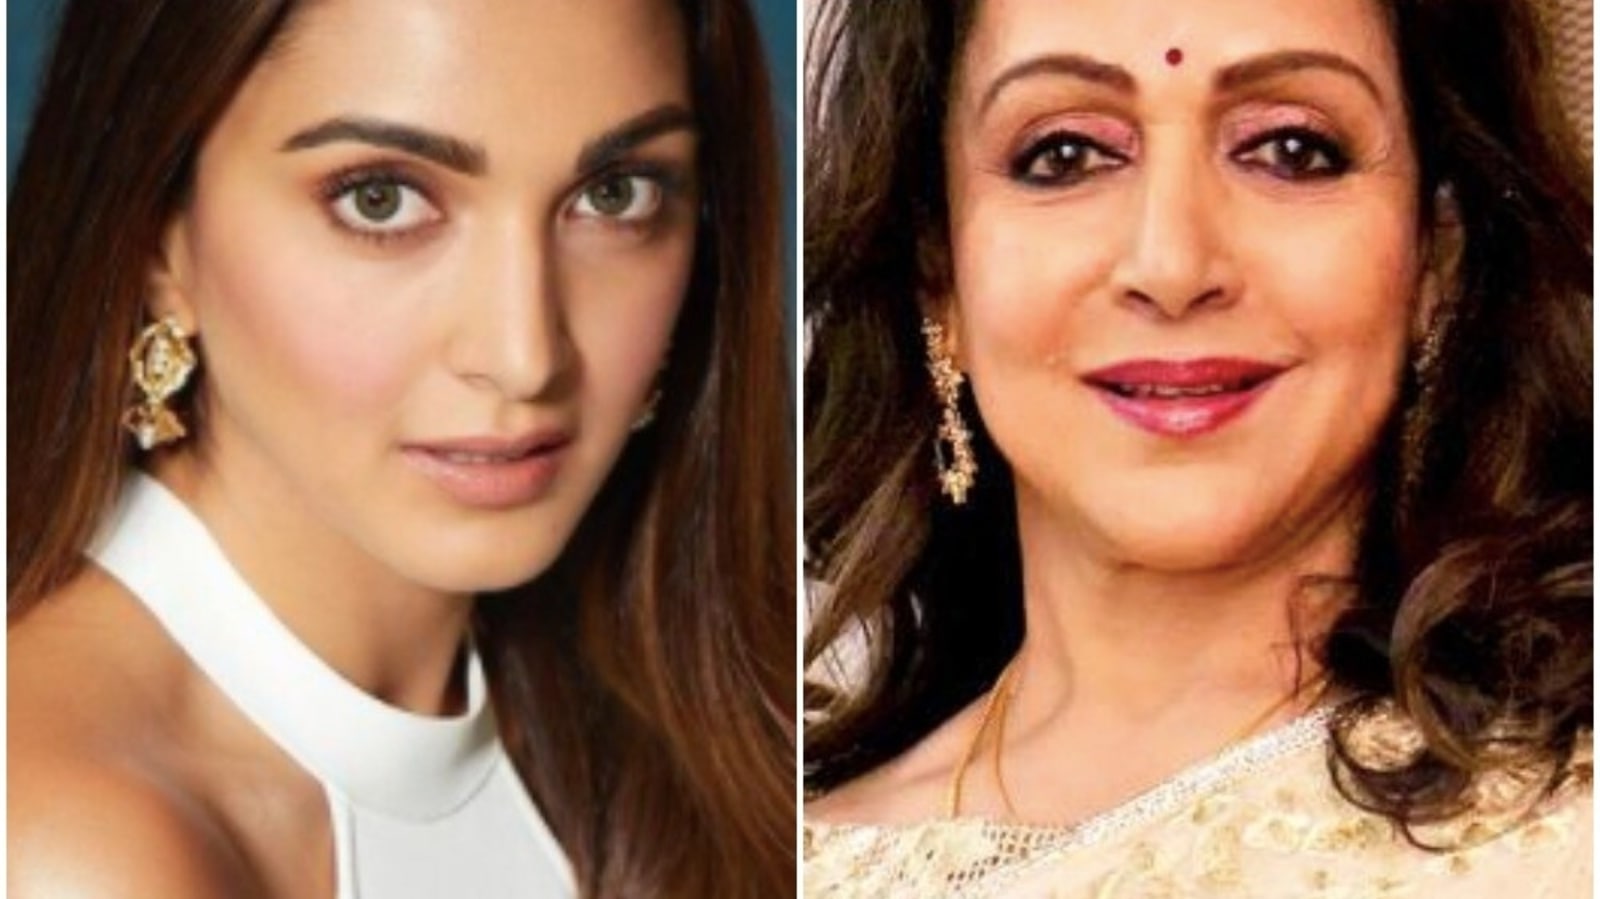 Accumulatie Profeet meer en meer Kiara Advani reacts to Hema Malini comparisons, says 'I want to look like  myself' | Bollywood - Hindustan Times